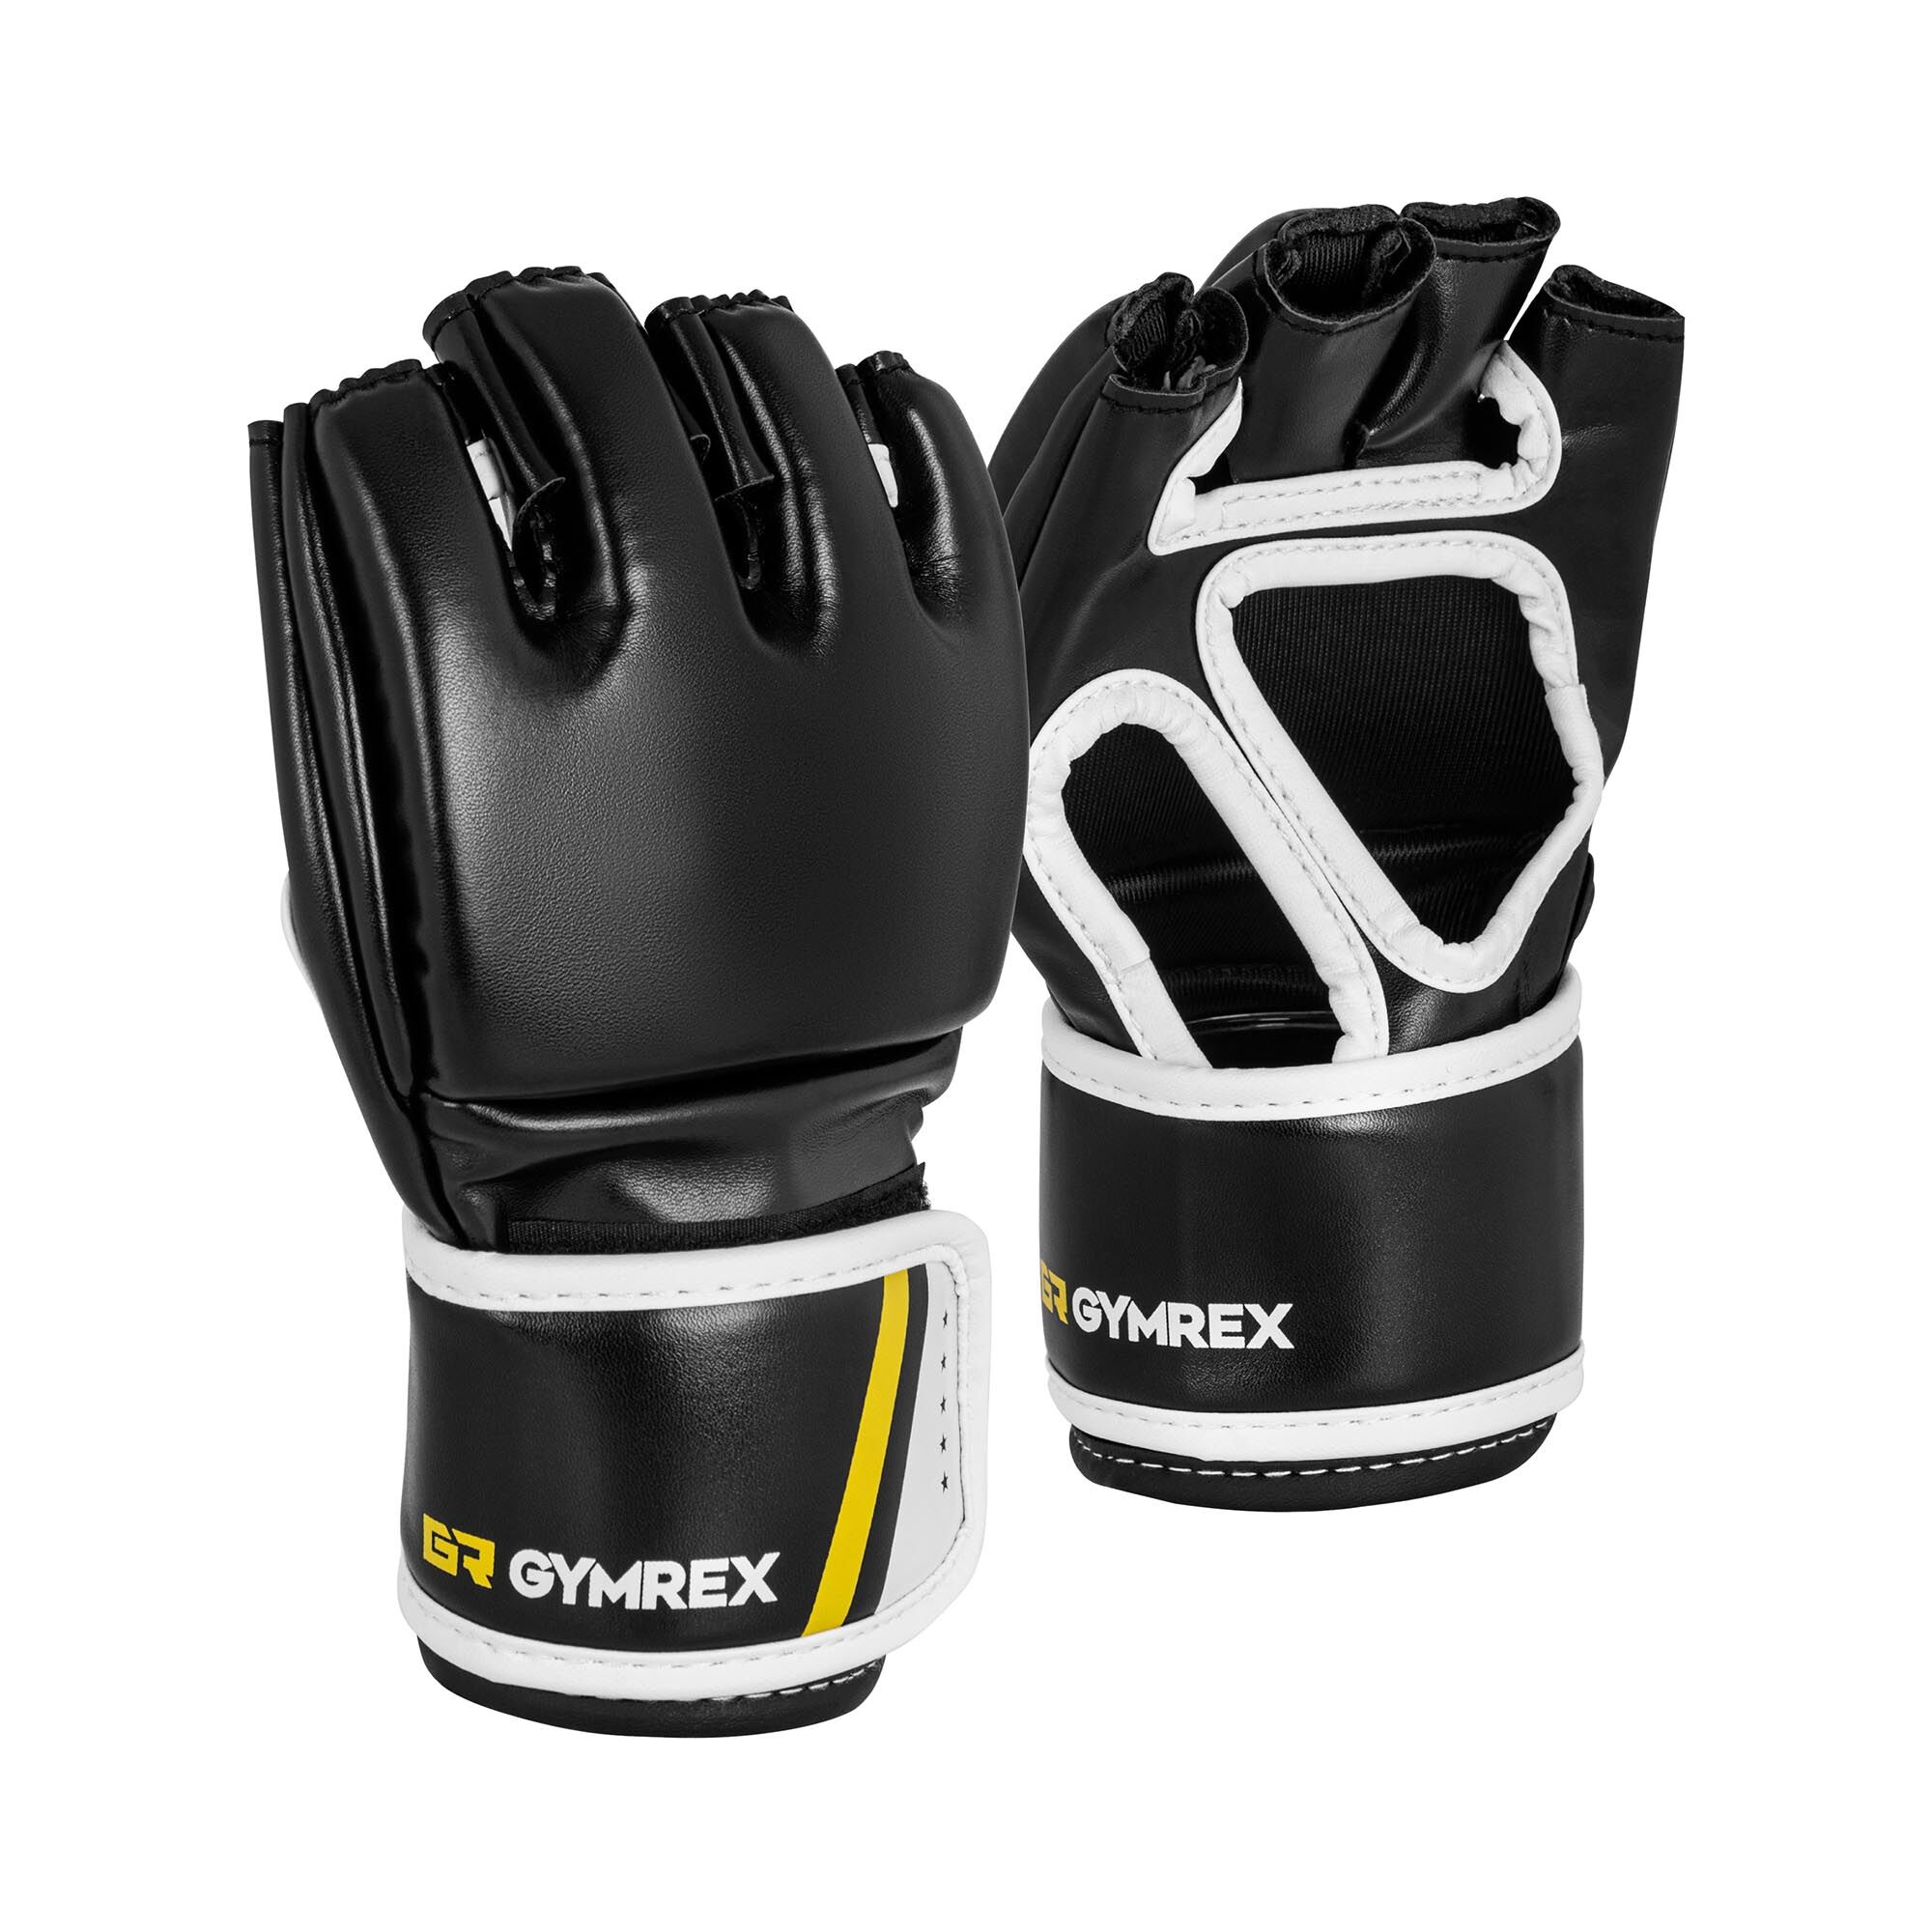 Gymrex MMA Gloves - size L/XL - black - without thumbs GR-GGR L/XL